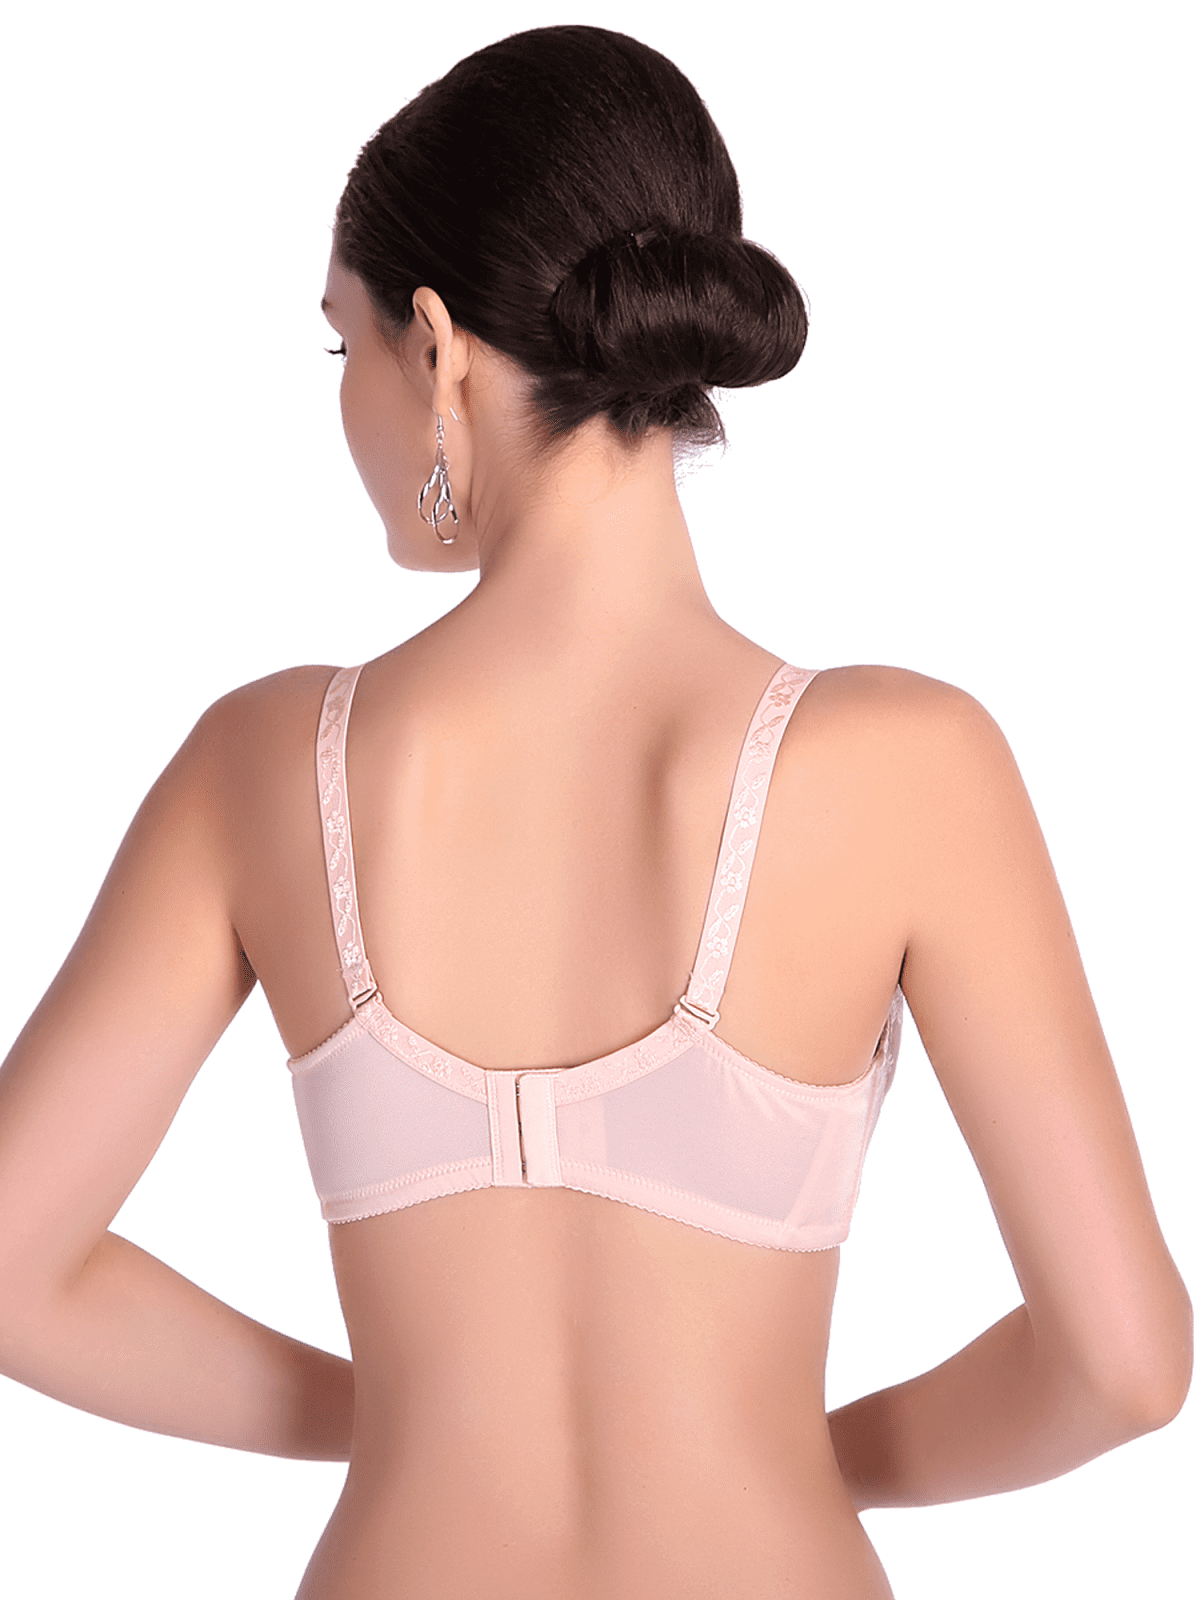 BIMEI Women's Mastectomy Bra with Pockets for Breast Prosthesis Wire Free  Fashion Everyday Bra Plus Size 8101,Beige,36C 